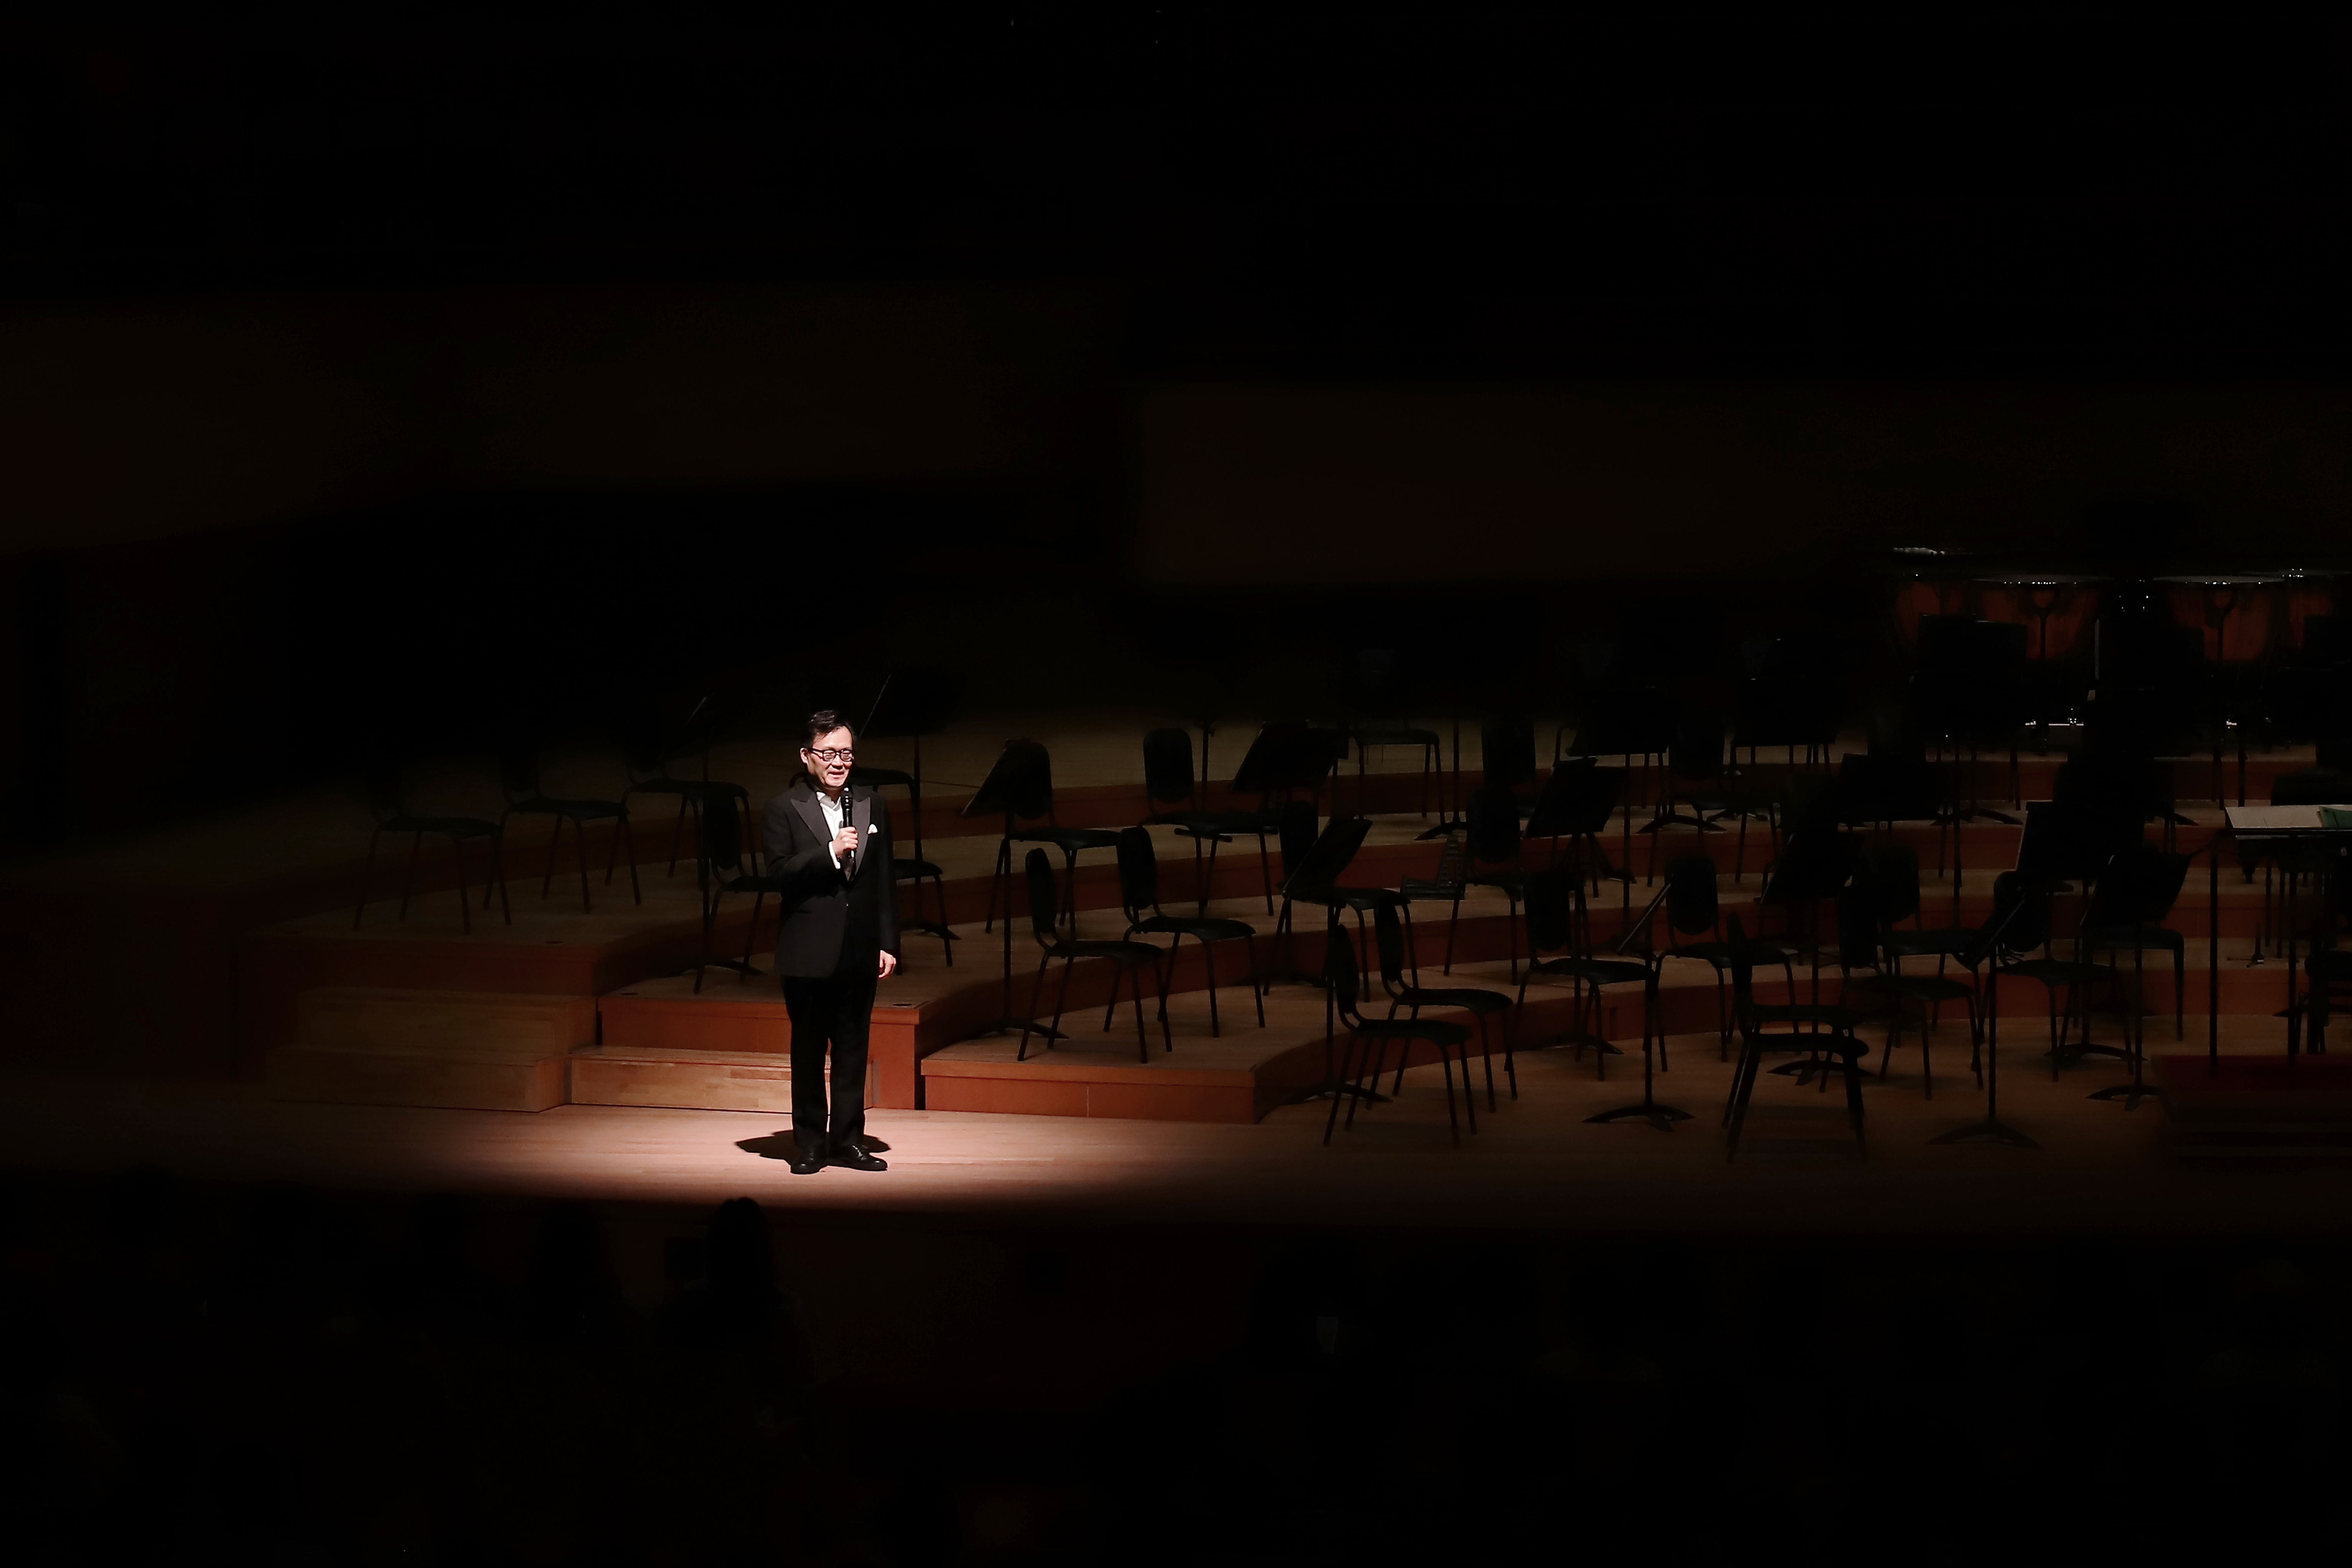 [7.14]Bucheon Philharmonic Orchestra Lecture ConcertⅢ - Classical Playlist-Romantic Eraⅰ